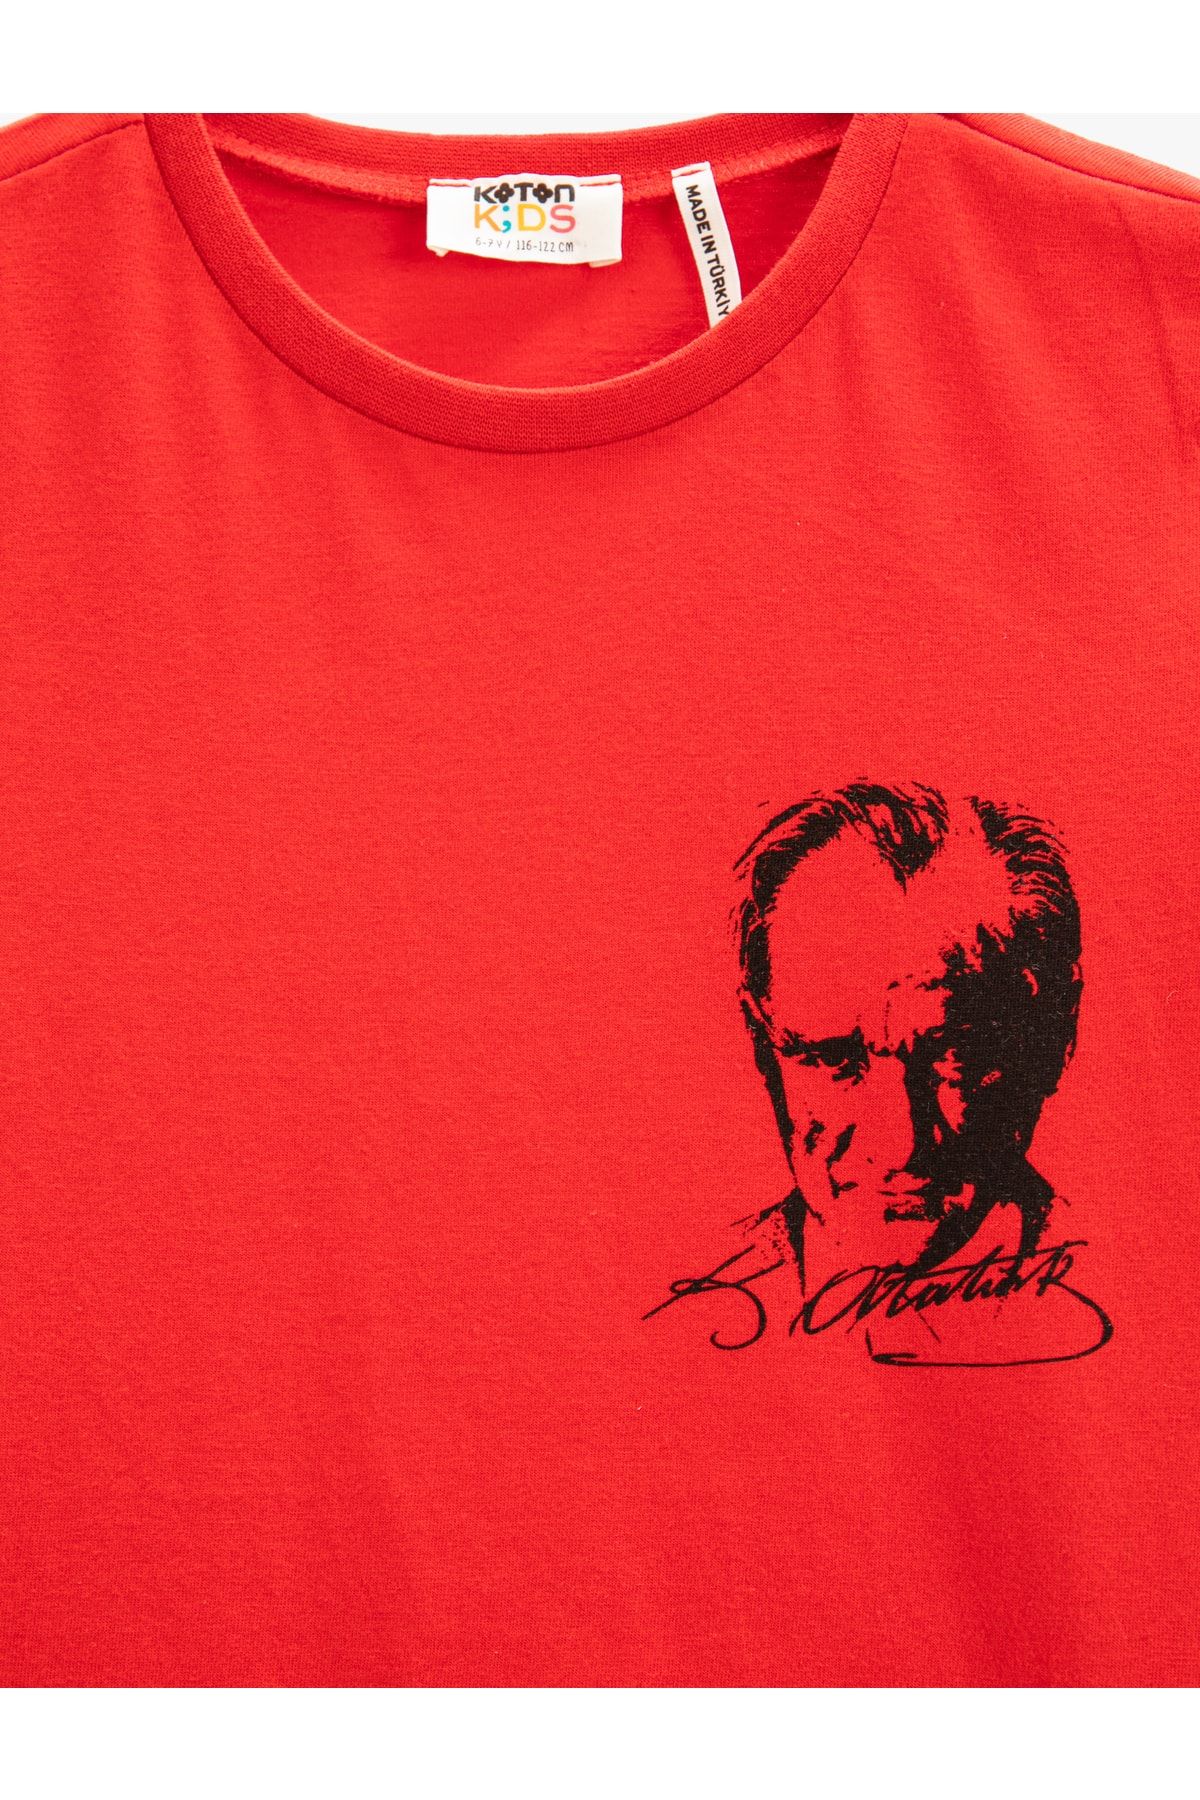 Koton تی شرت آستین کوتاه یقه خدمه با چاپ آتاتورک